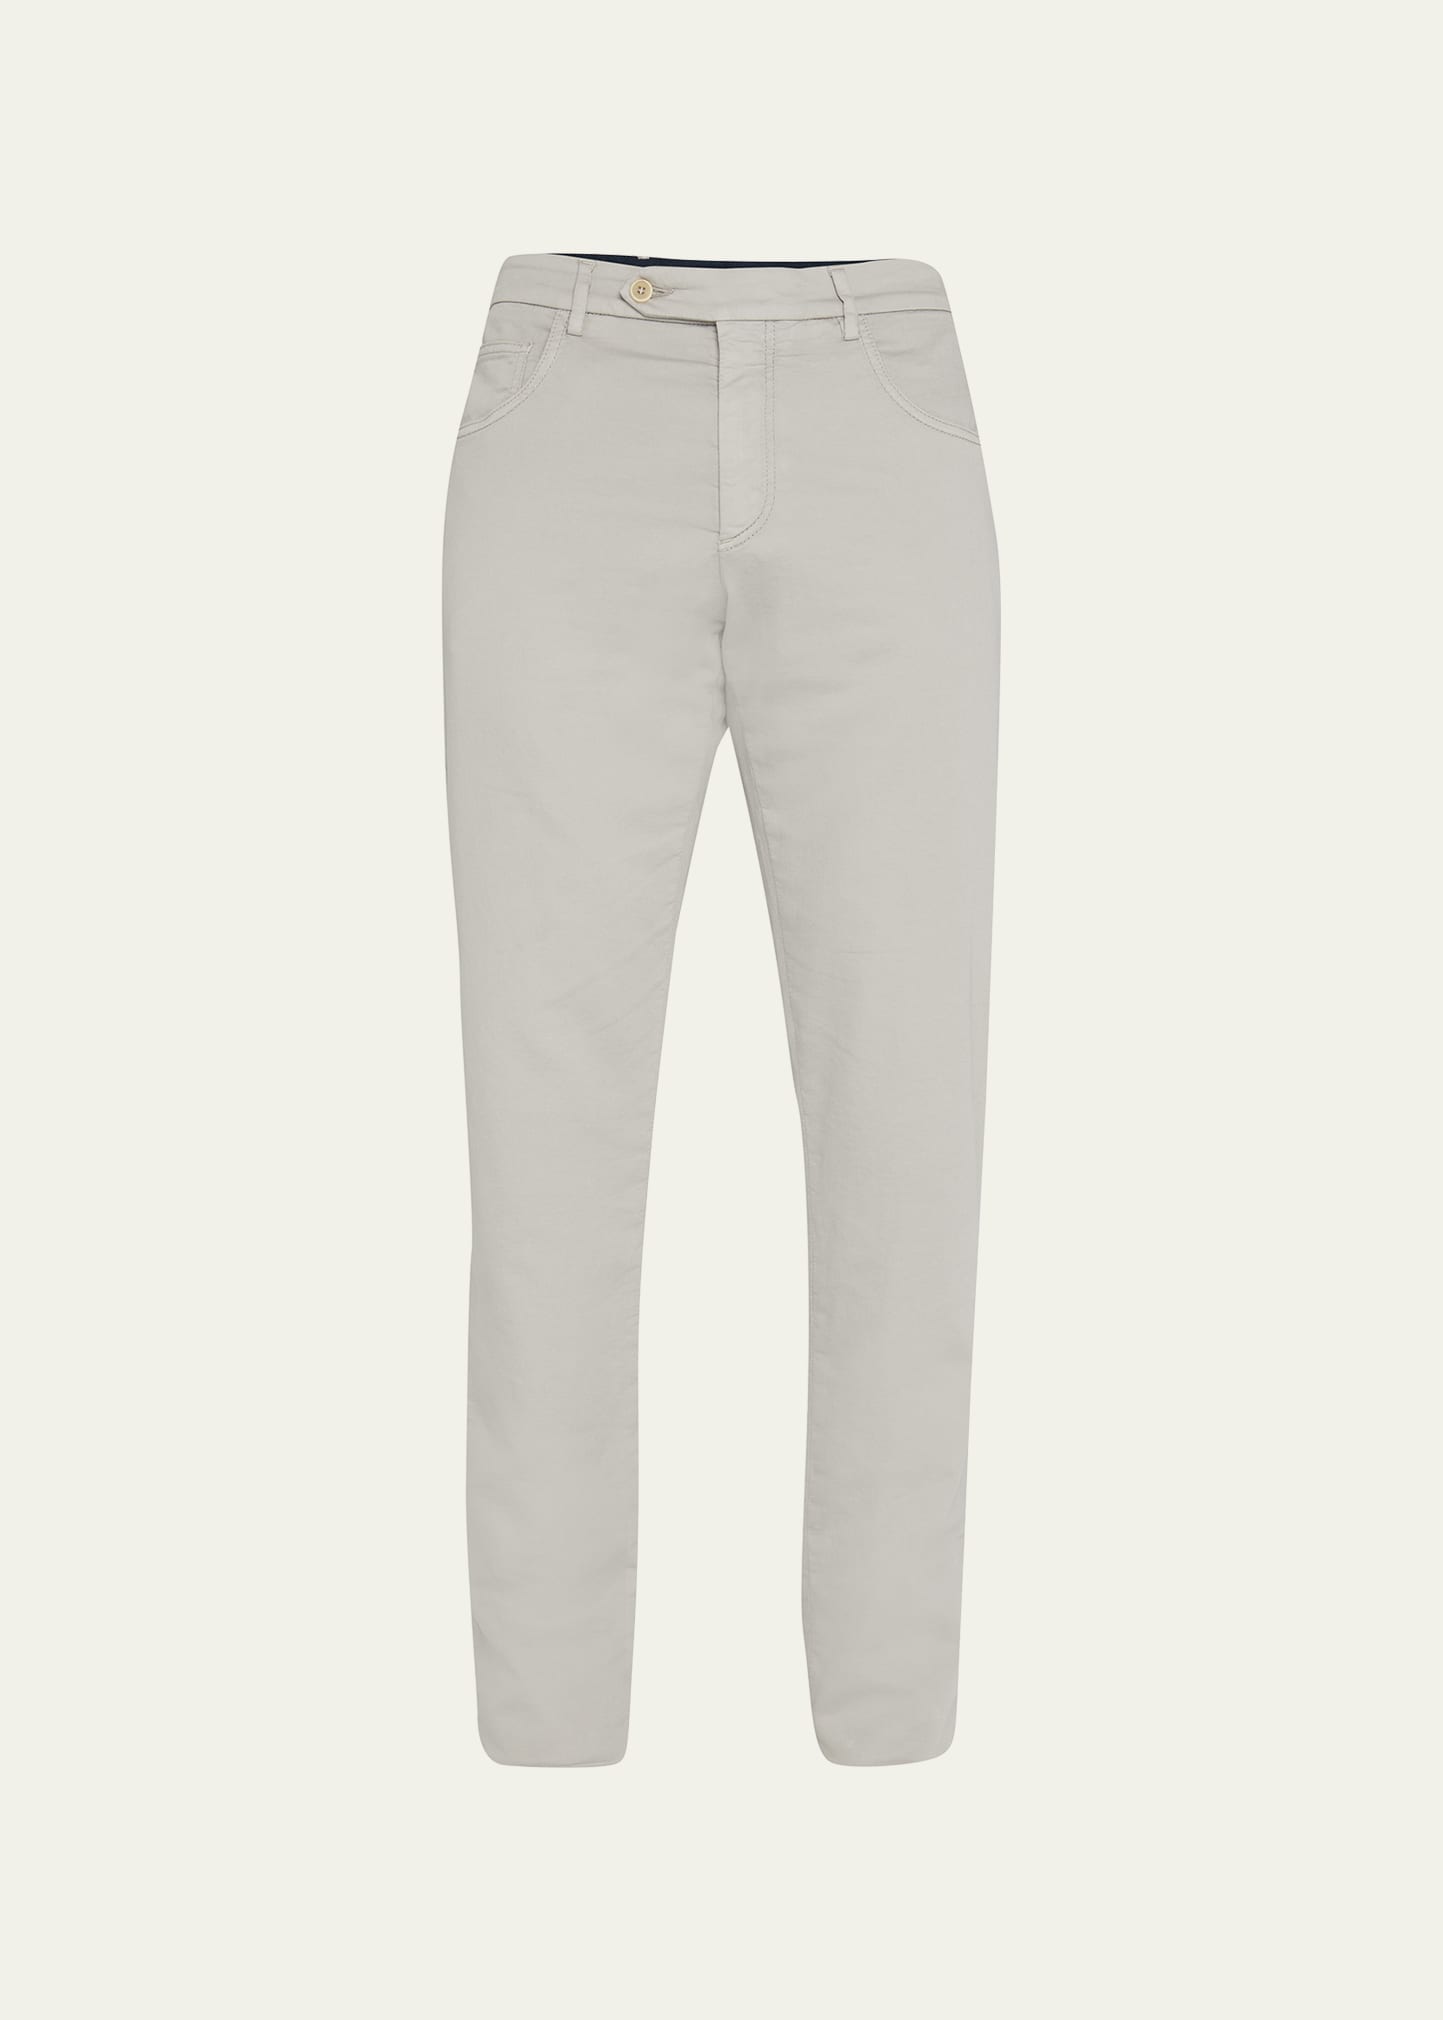 Zanella Men's Garment-dyed Active Pants In Medium Grey